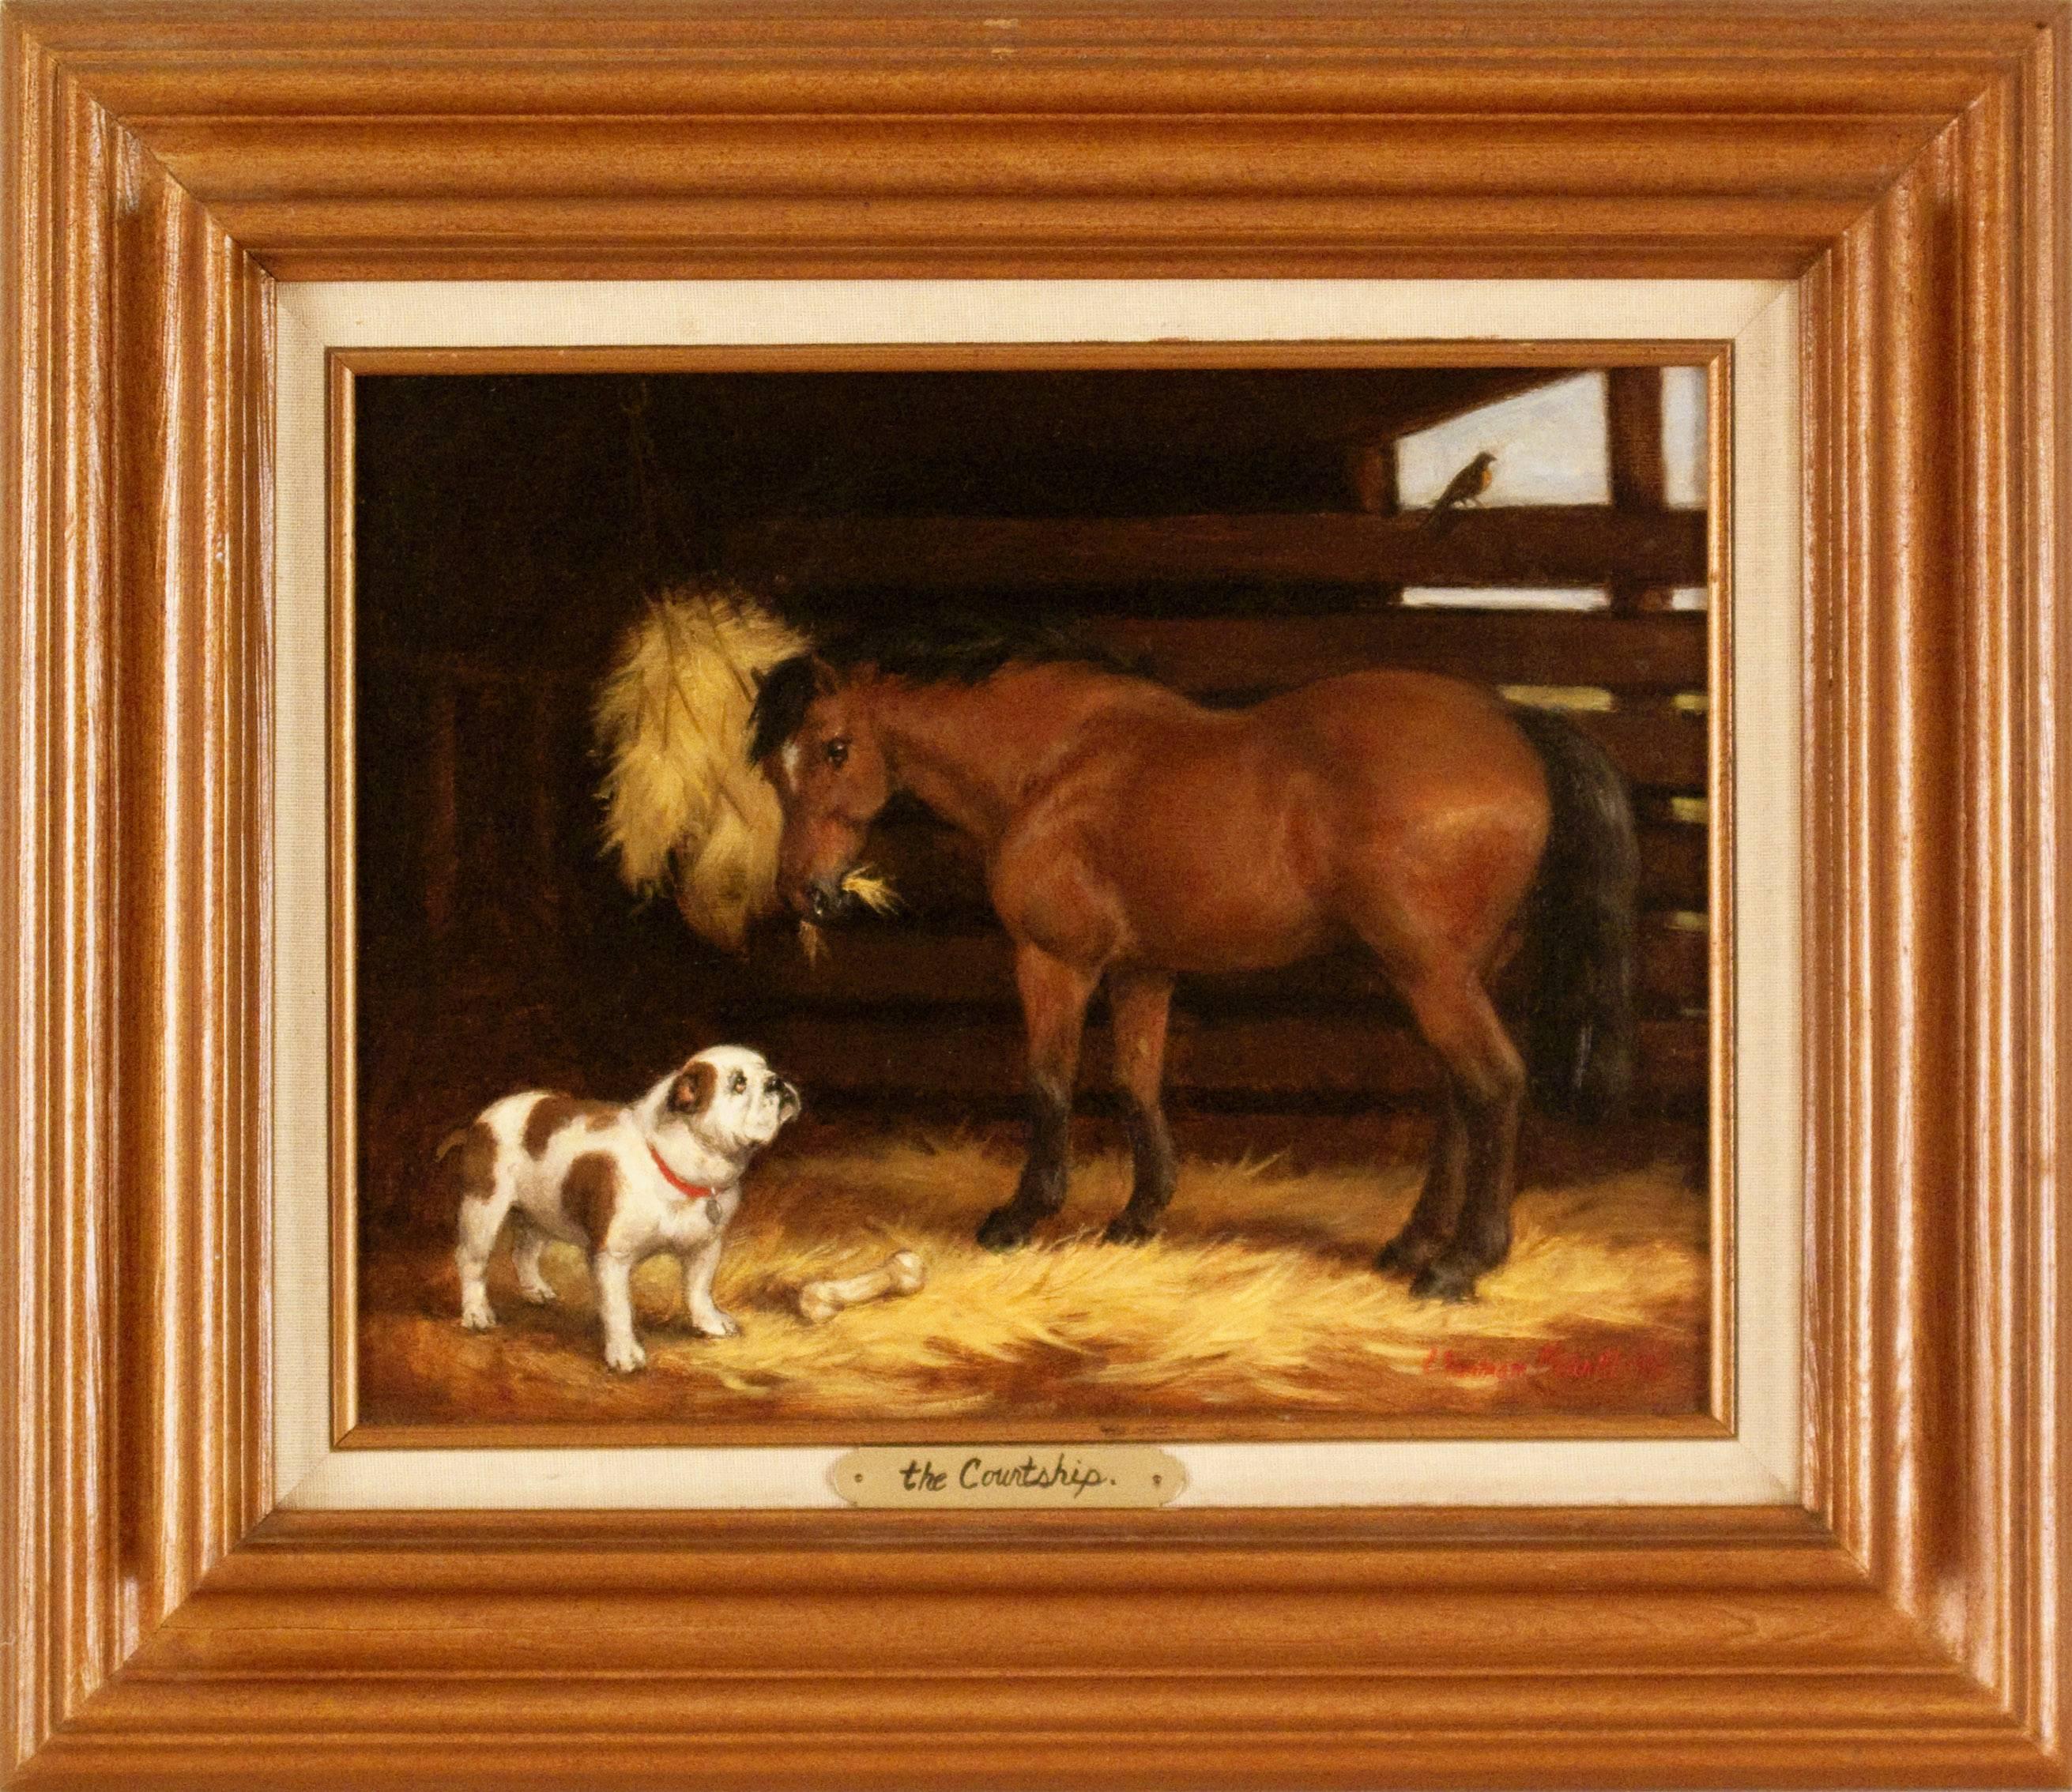 Christine Merrill Animal Painting - The Courtship, 1987